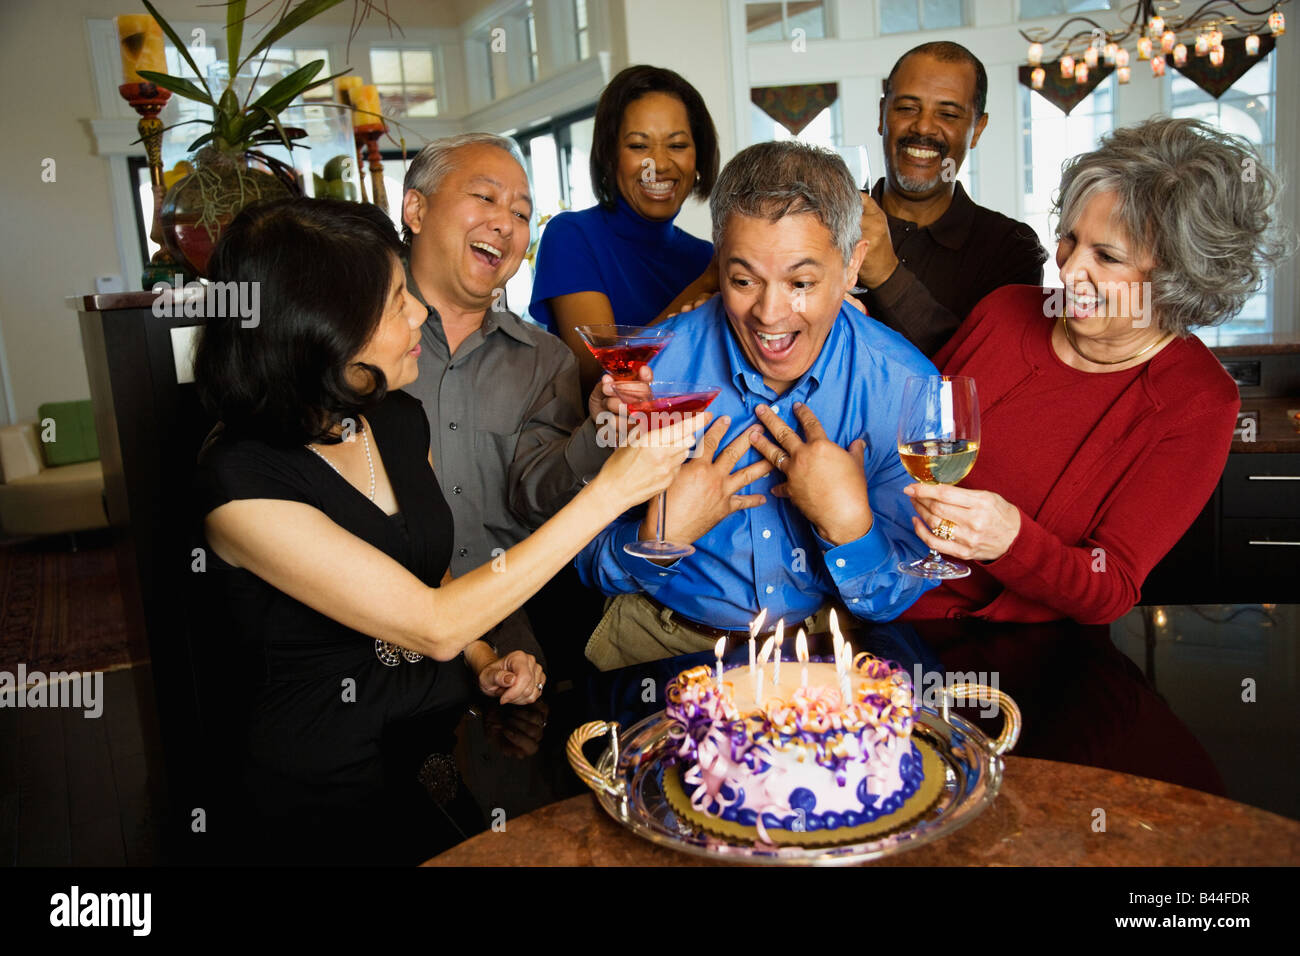 Hispanic man celebrating birthday with multi-ethnic friends Stock Photo